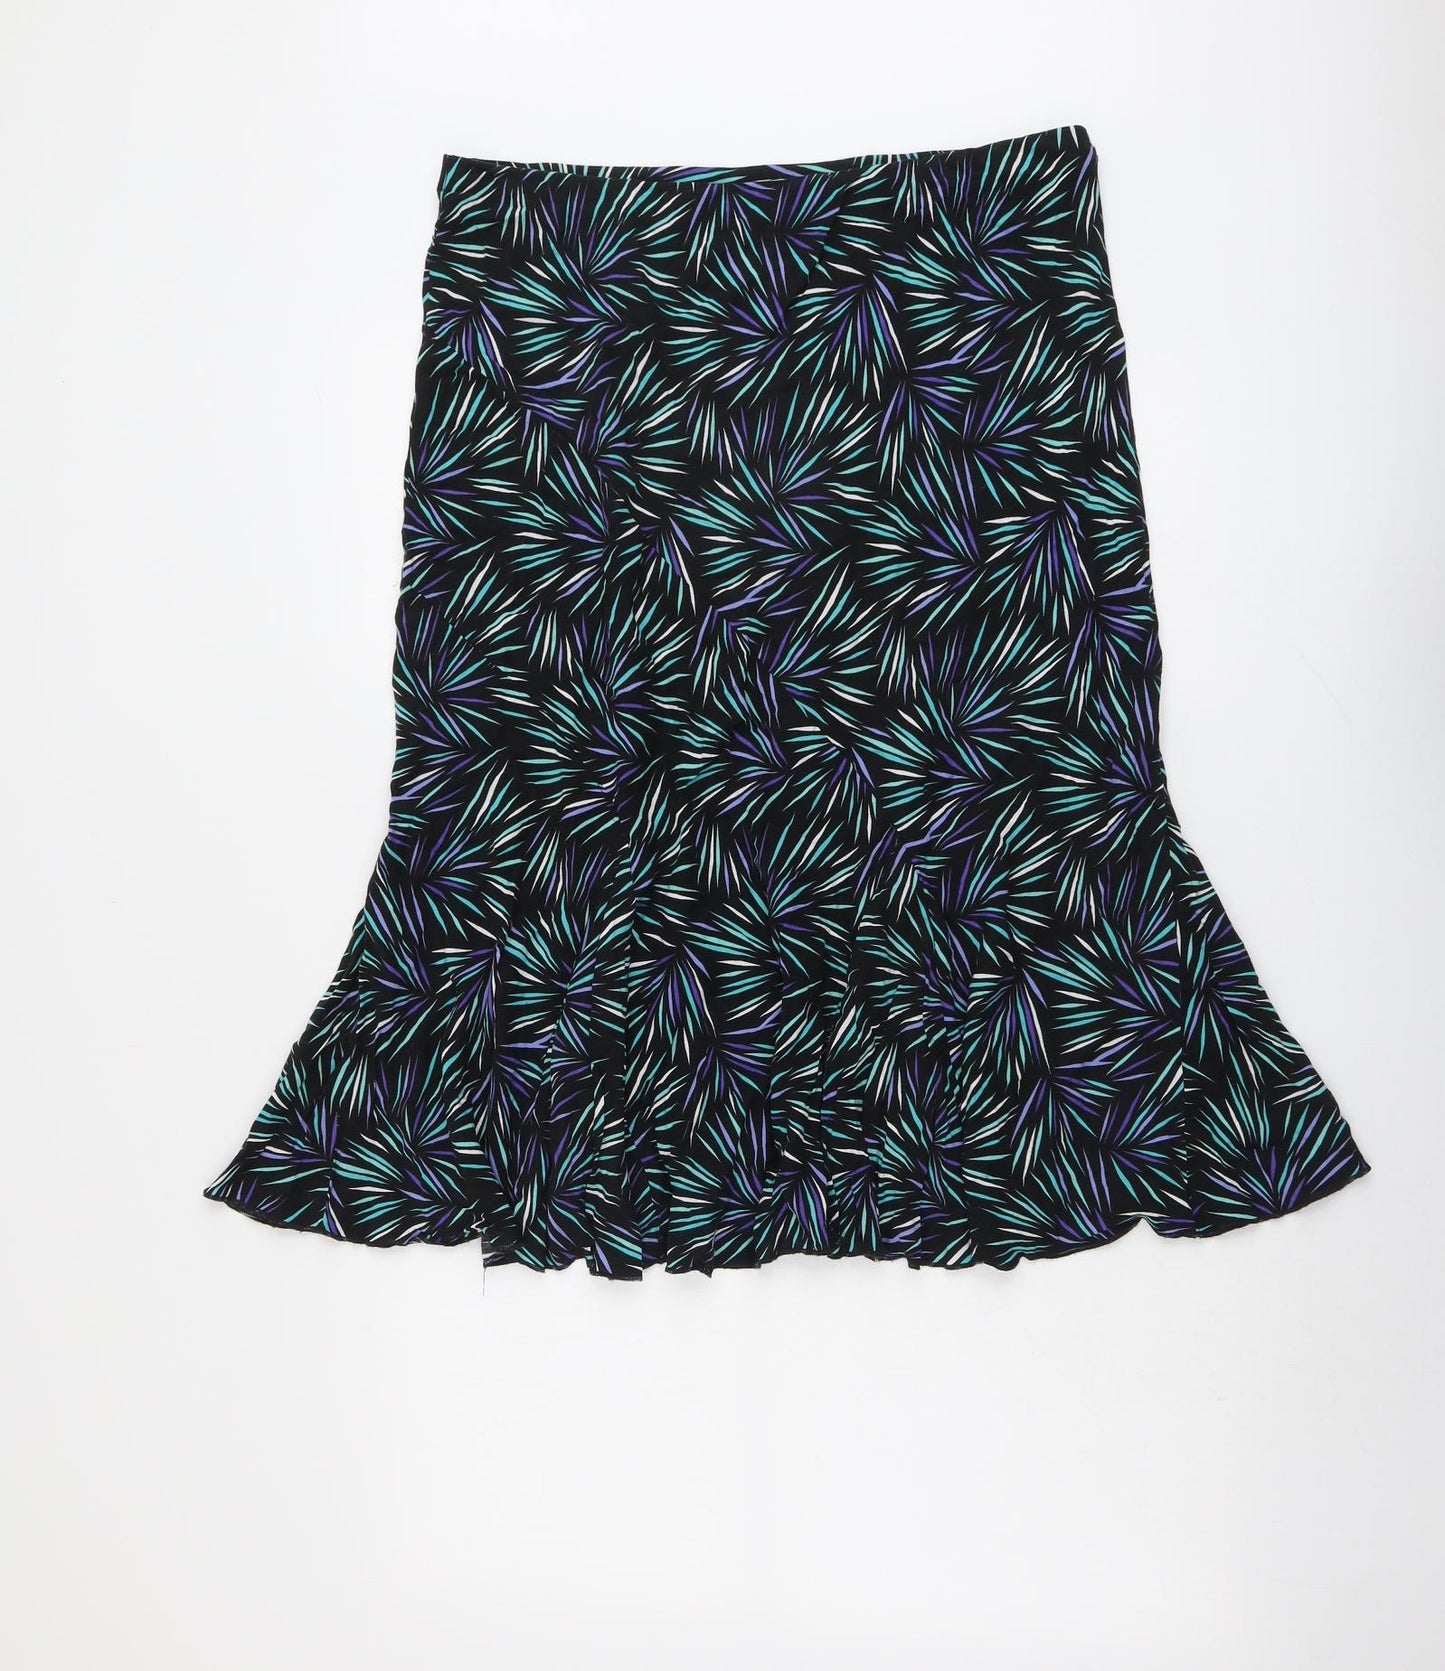 Bonmarché Womens Black Geometric Viscose Swing Skirt Size 16